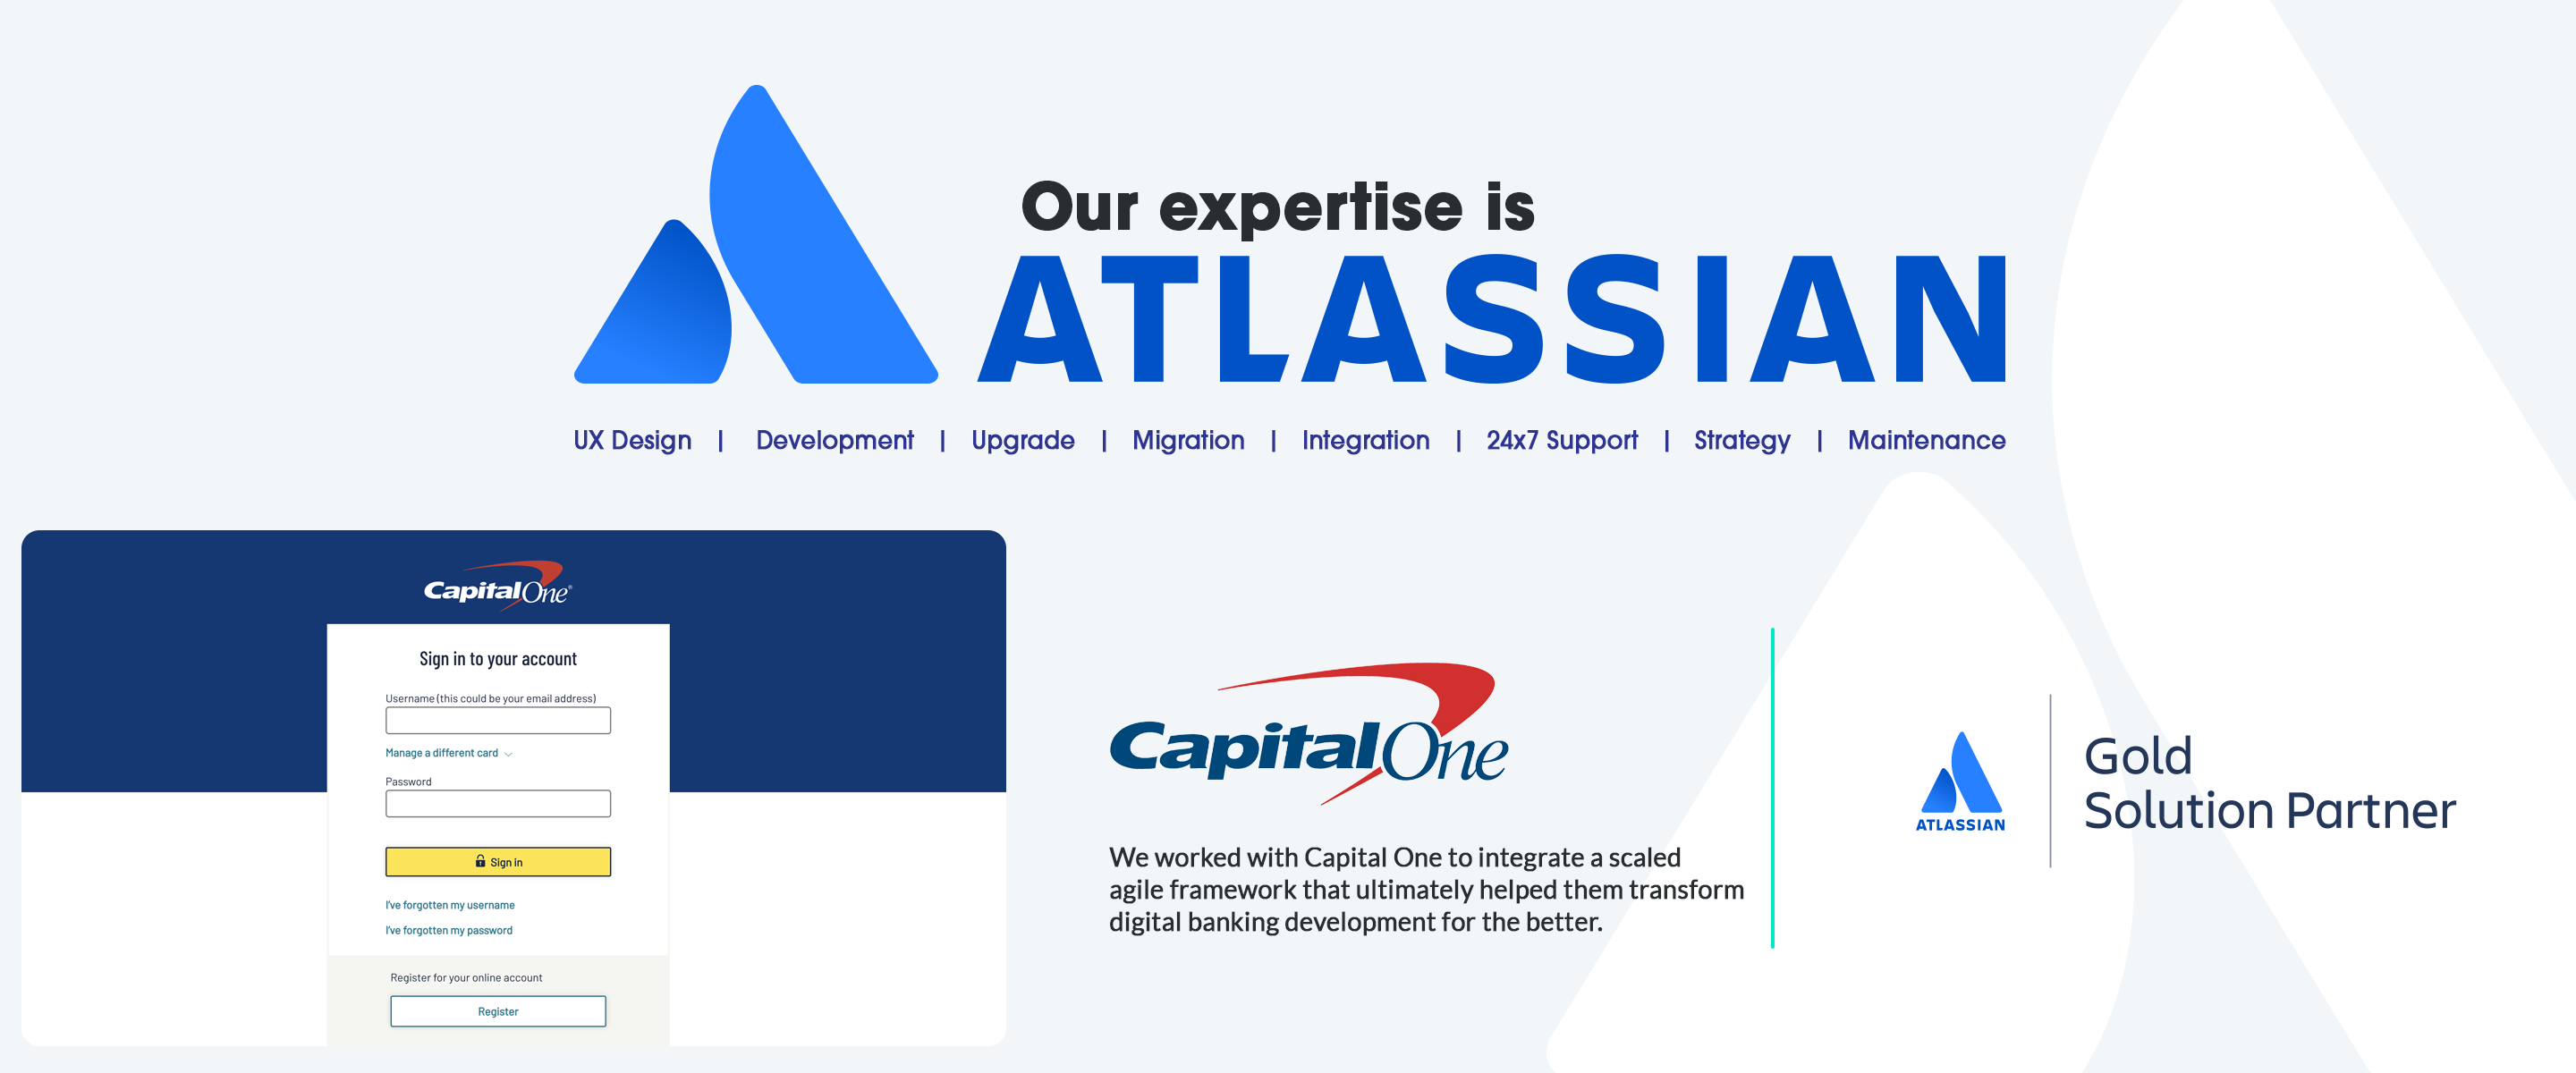 atlassian companies, atlassian services, atlassian service